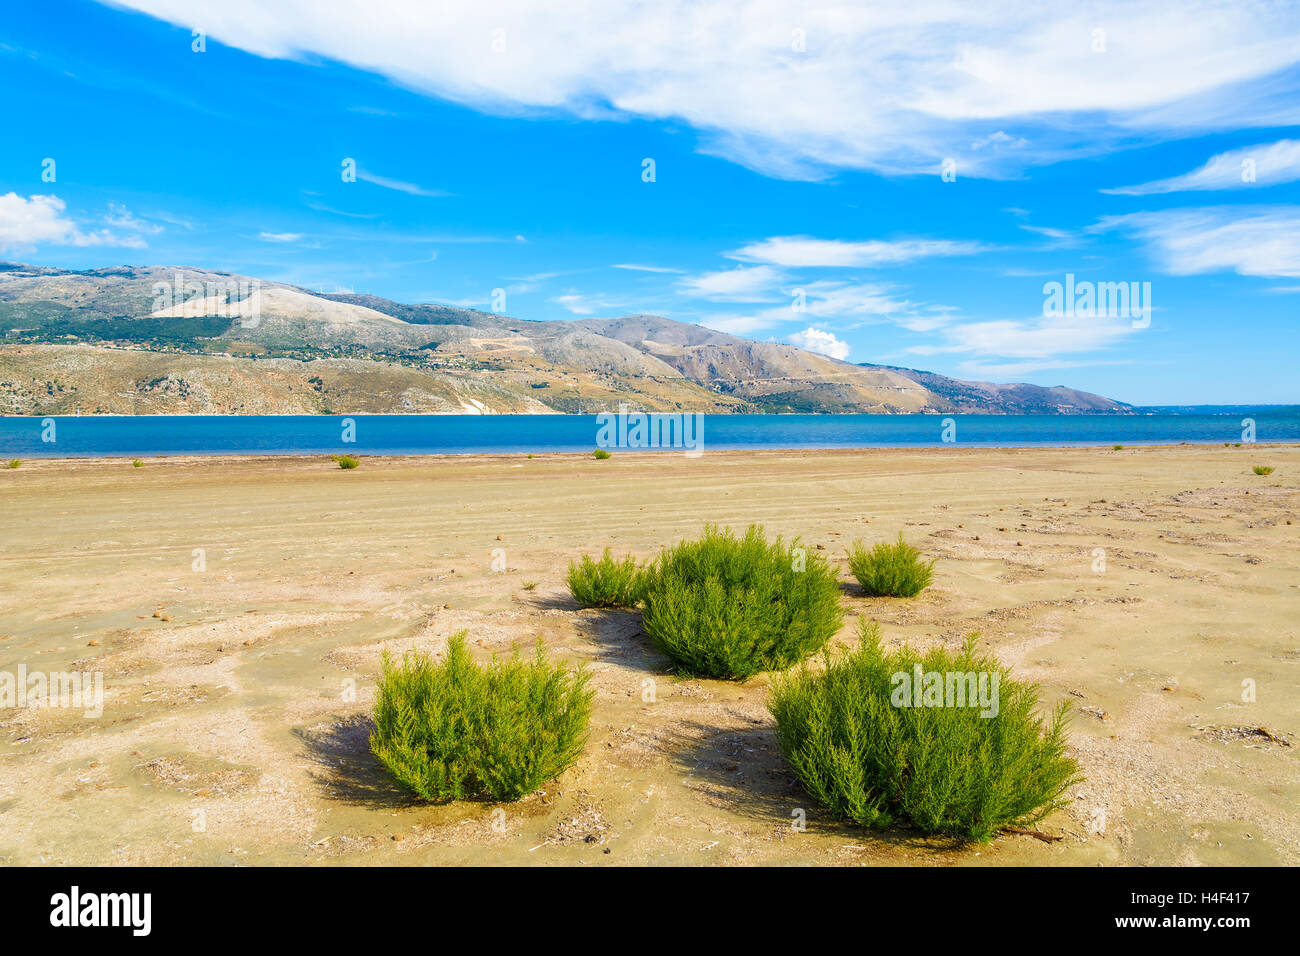 Green plants growing on sand at salt lake lagoon, Kefalonia island, Greece Stock Photo